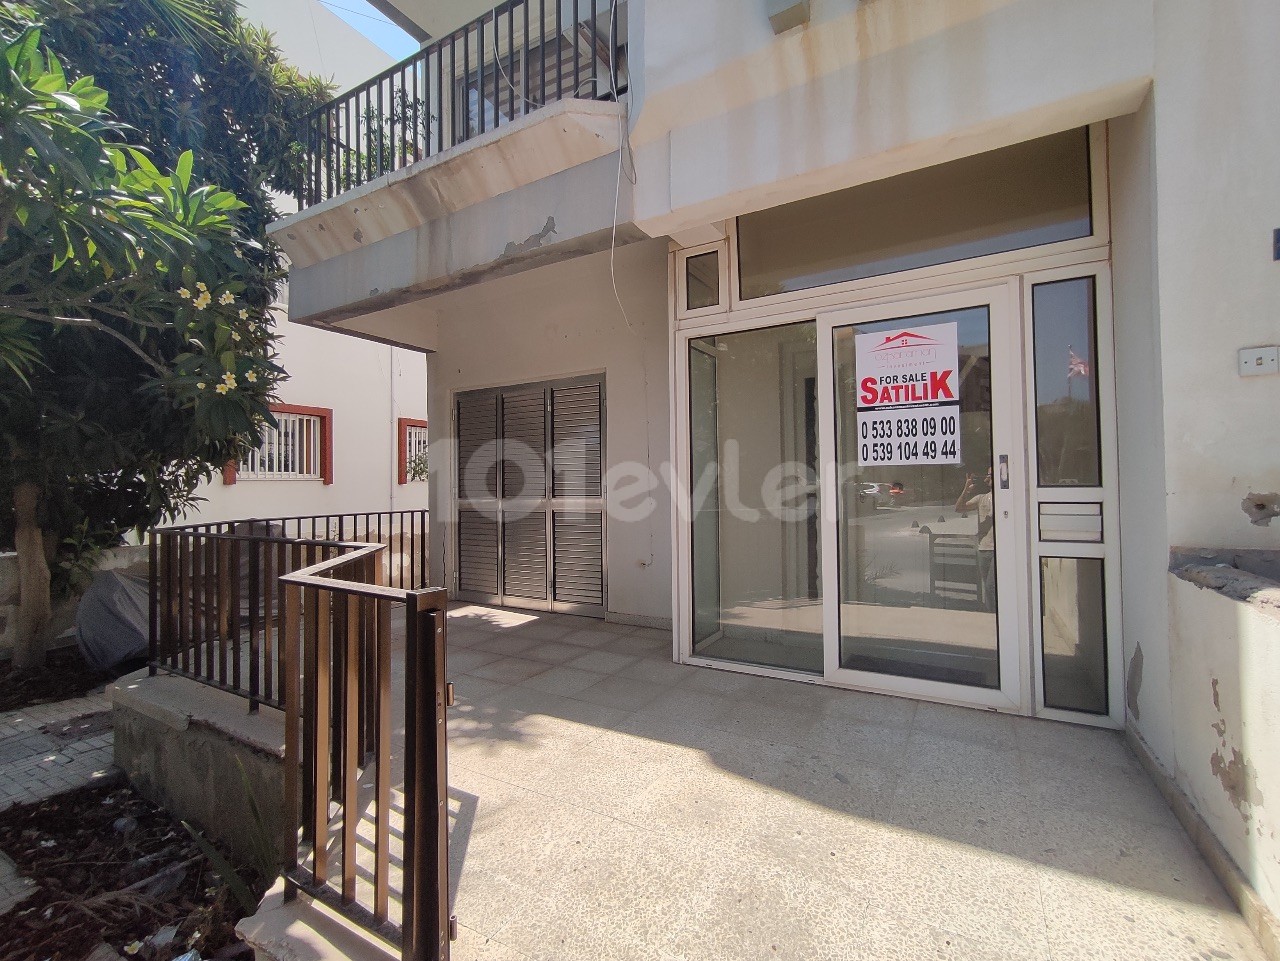 3+1 Ground Floor Flat for Sale in Gulseren, Famagusta from Özkaraman